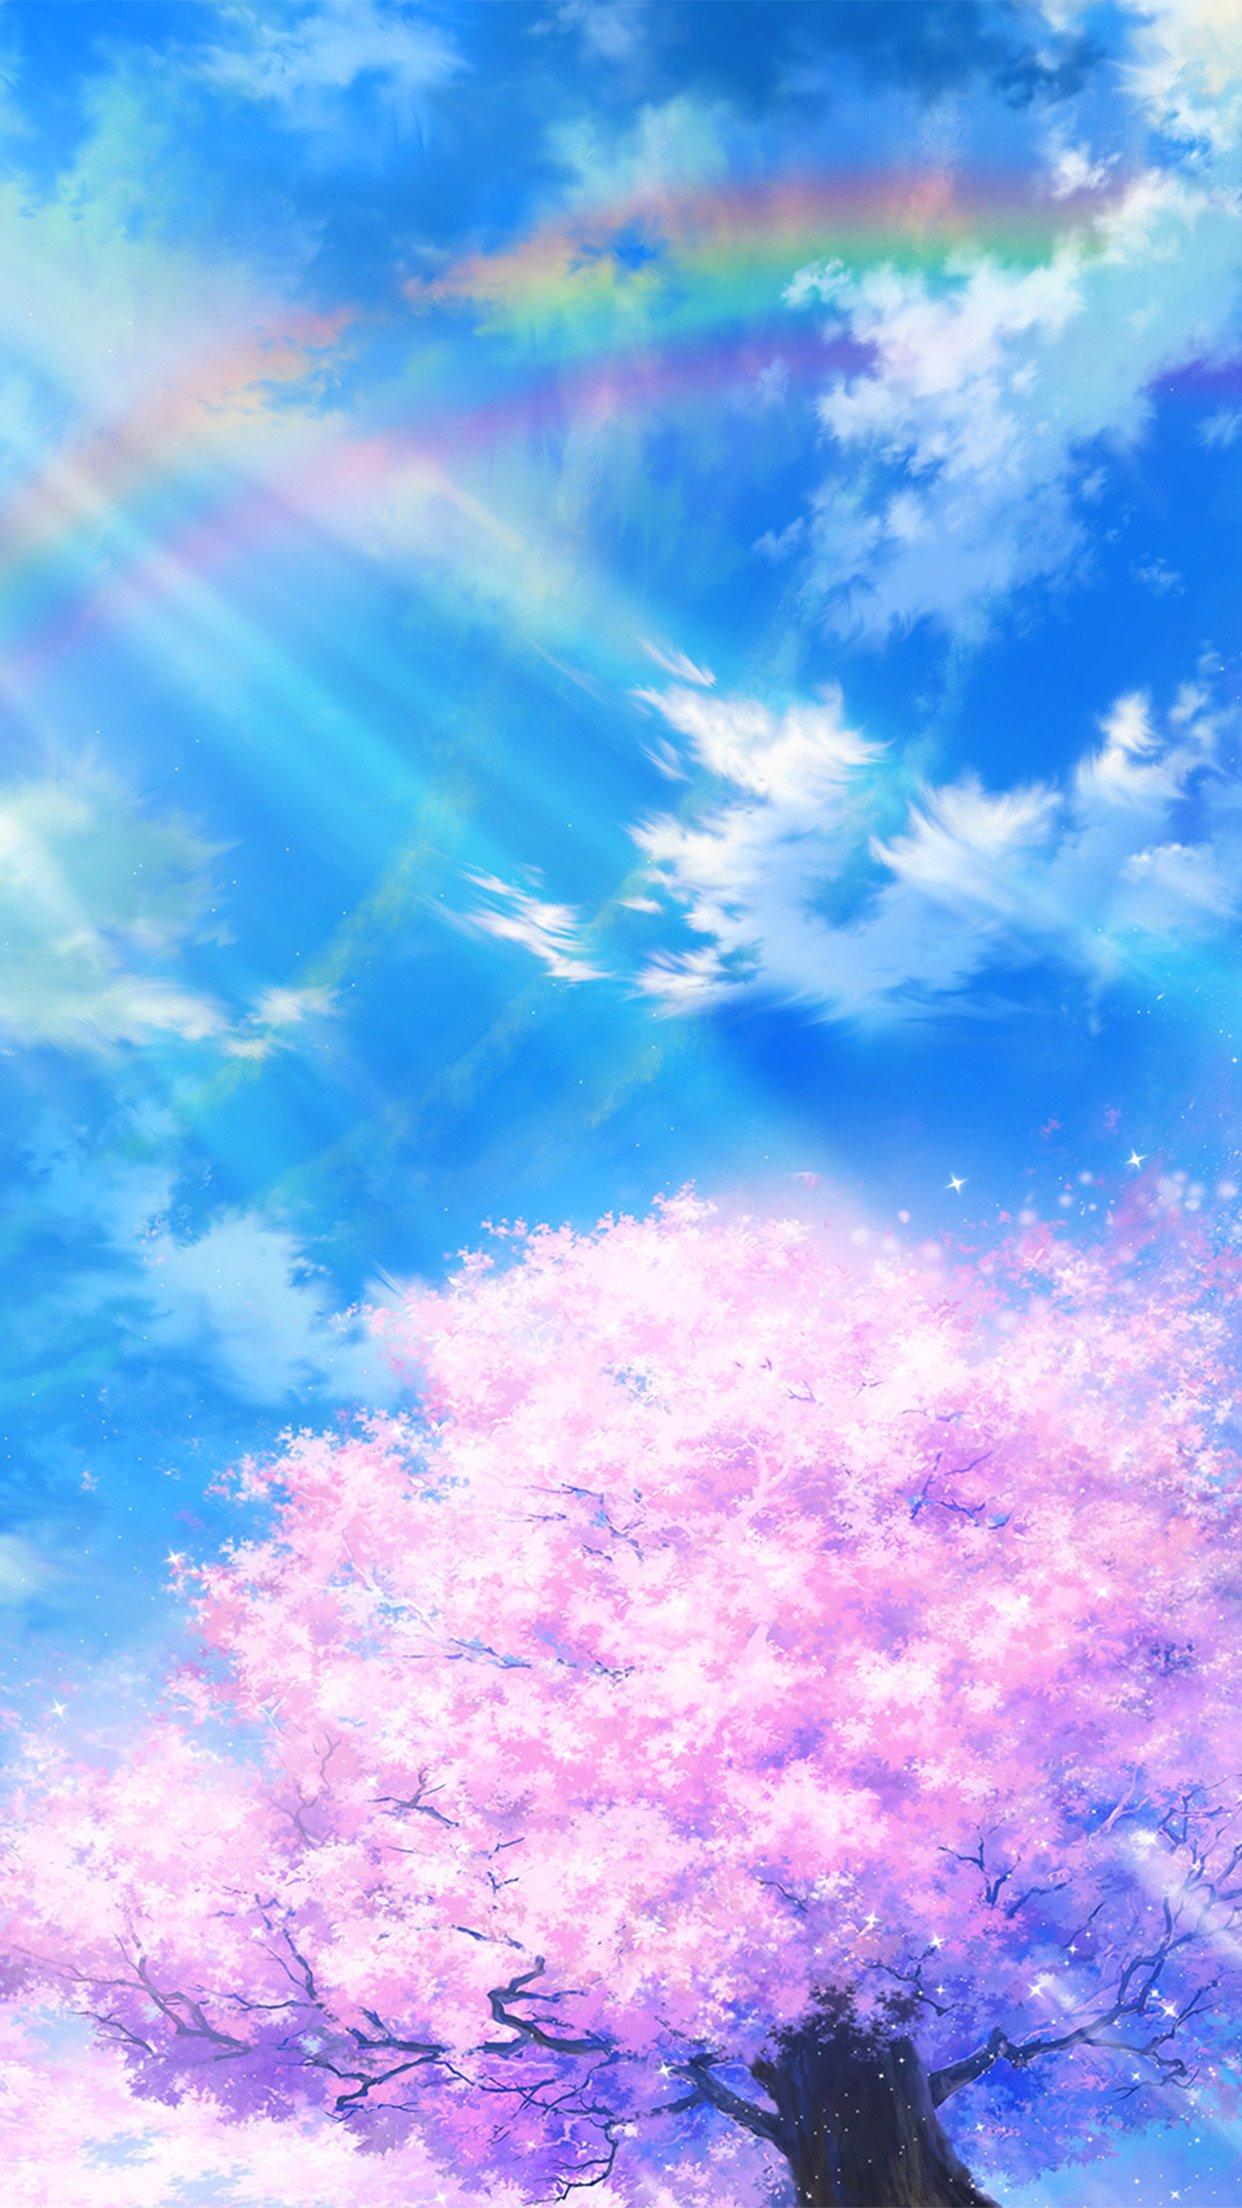 iPhone wallpaper. anime sky cloud